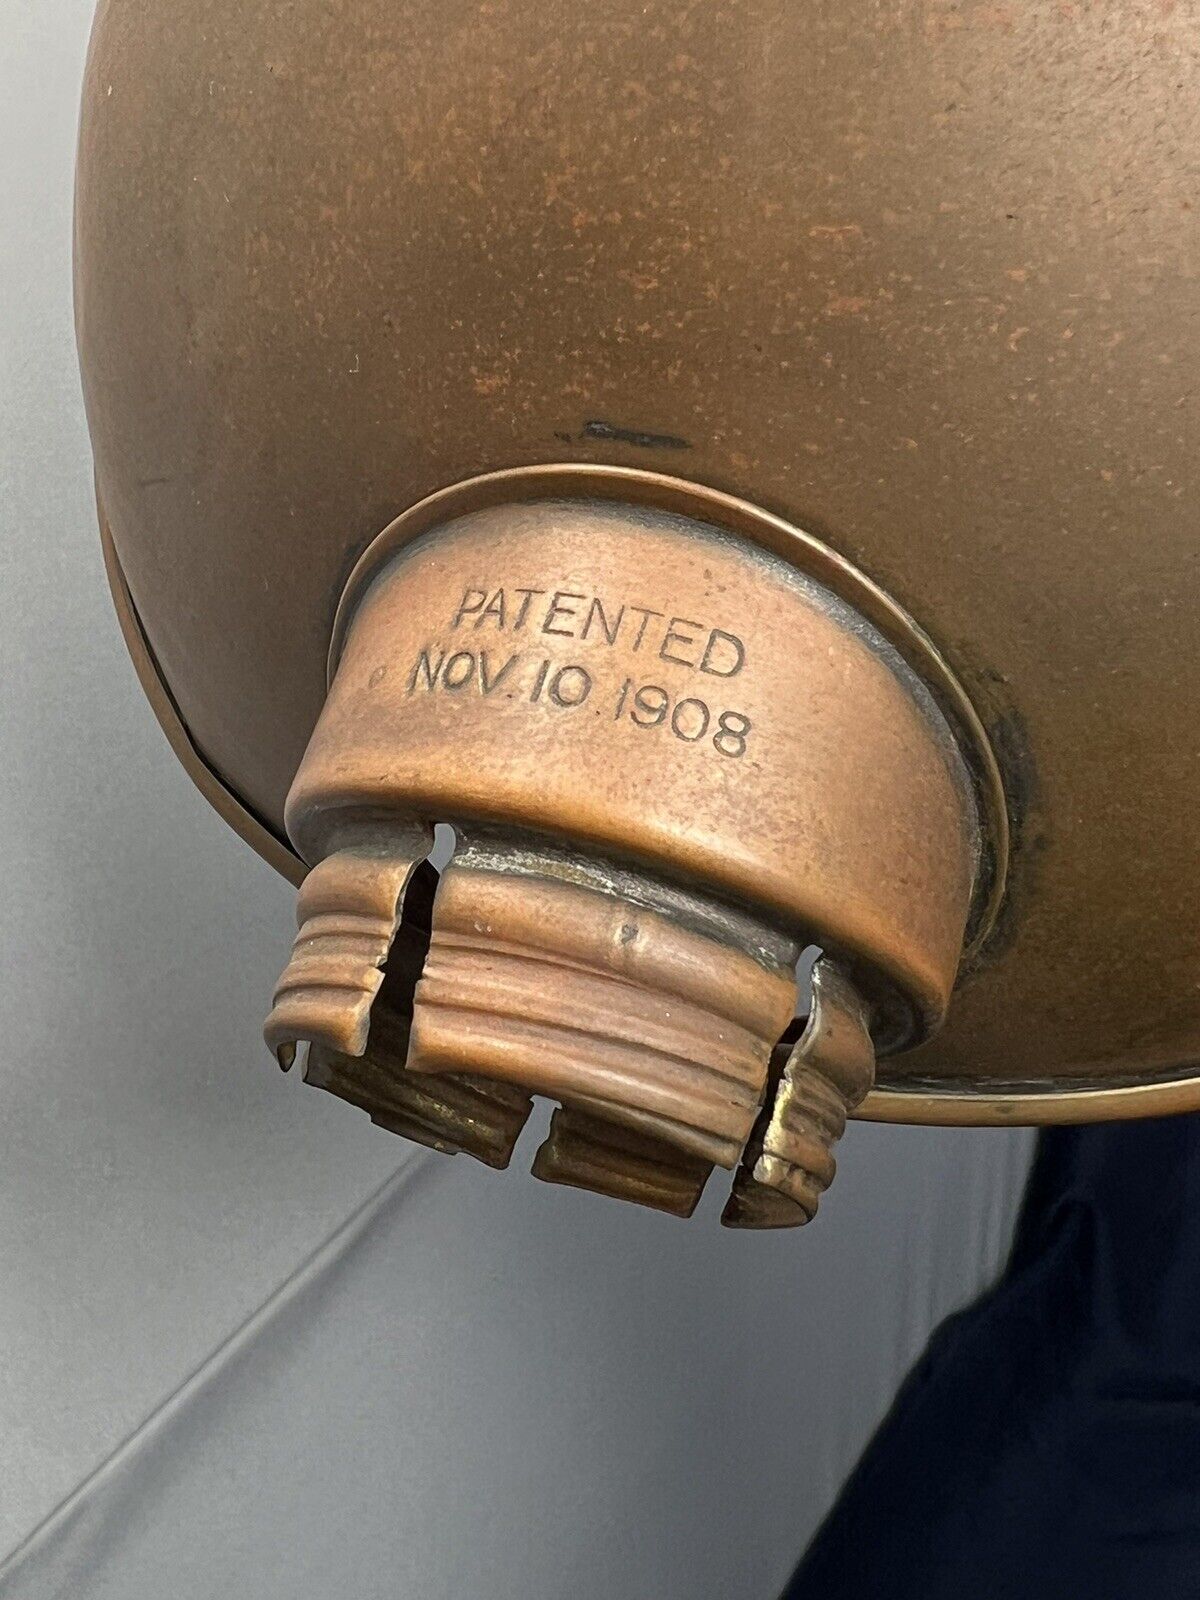 ANTIQUE BRASS METAL LAMP SHADE Dated NOV 10 1908 PARABOLIC OC WHITE FARIES era